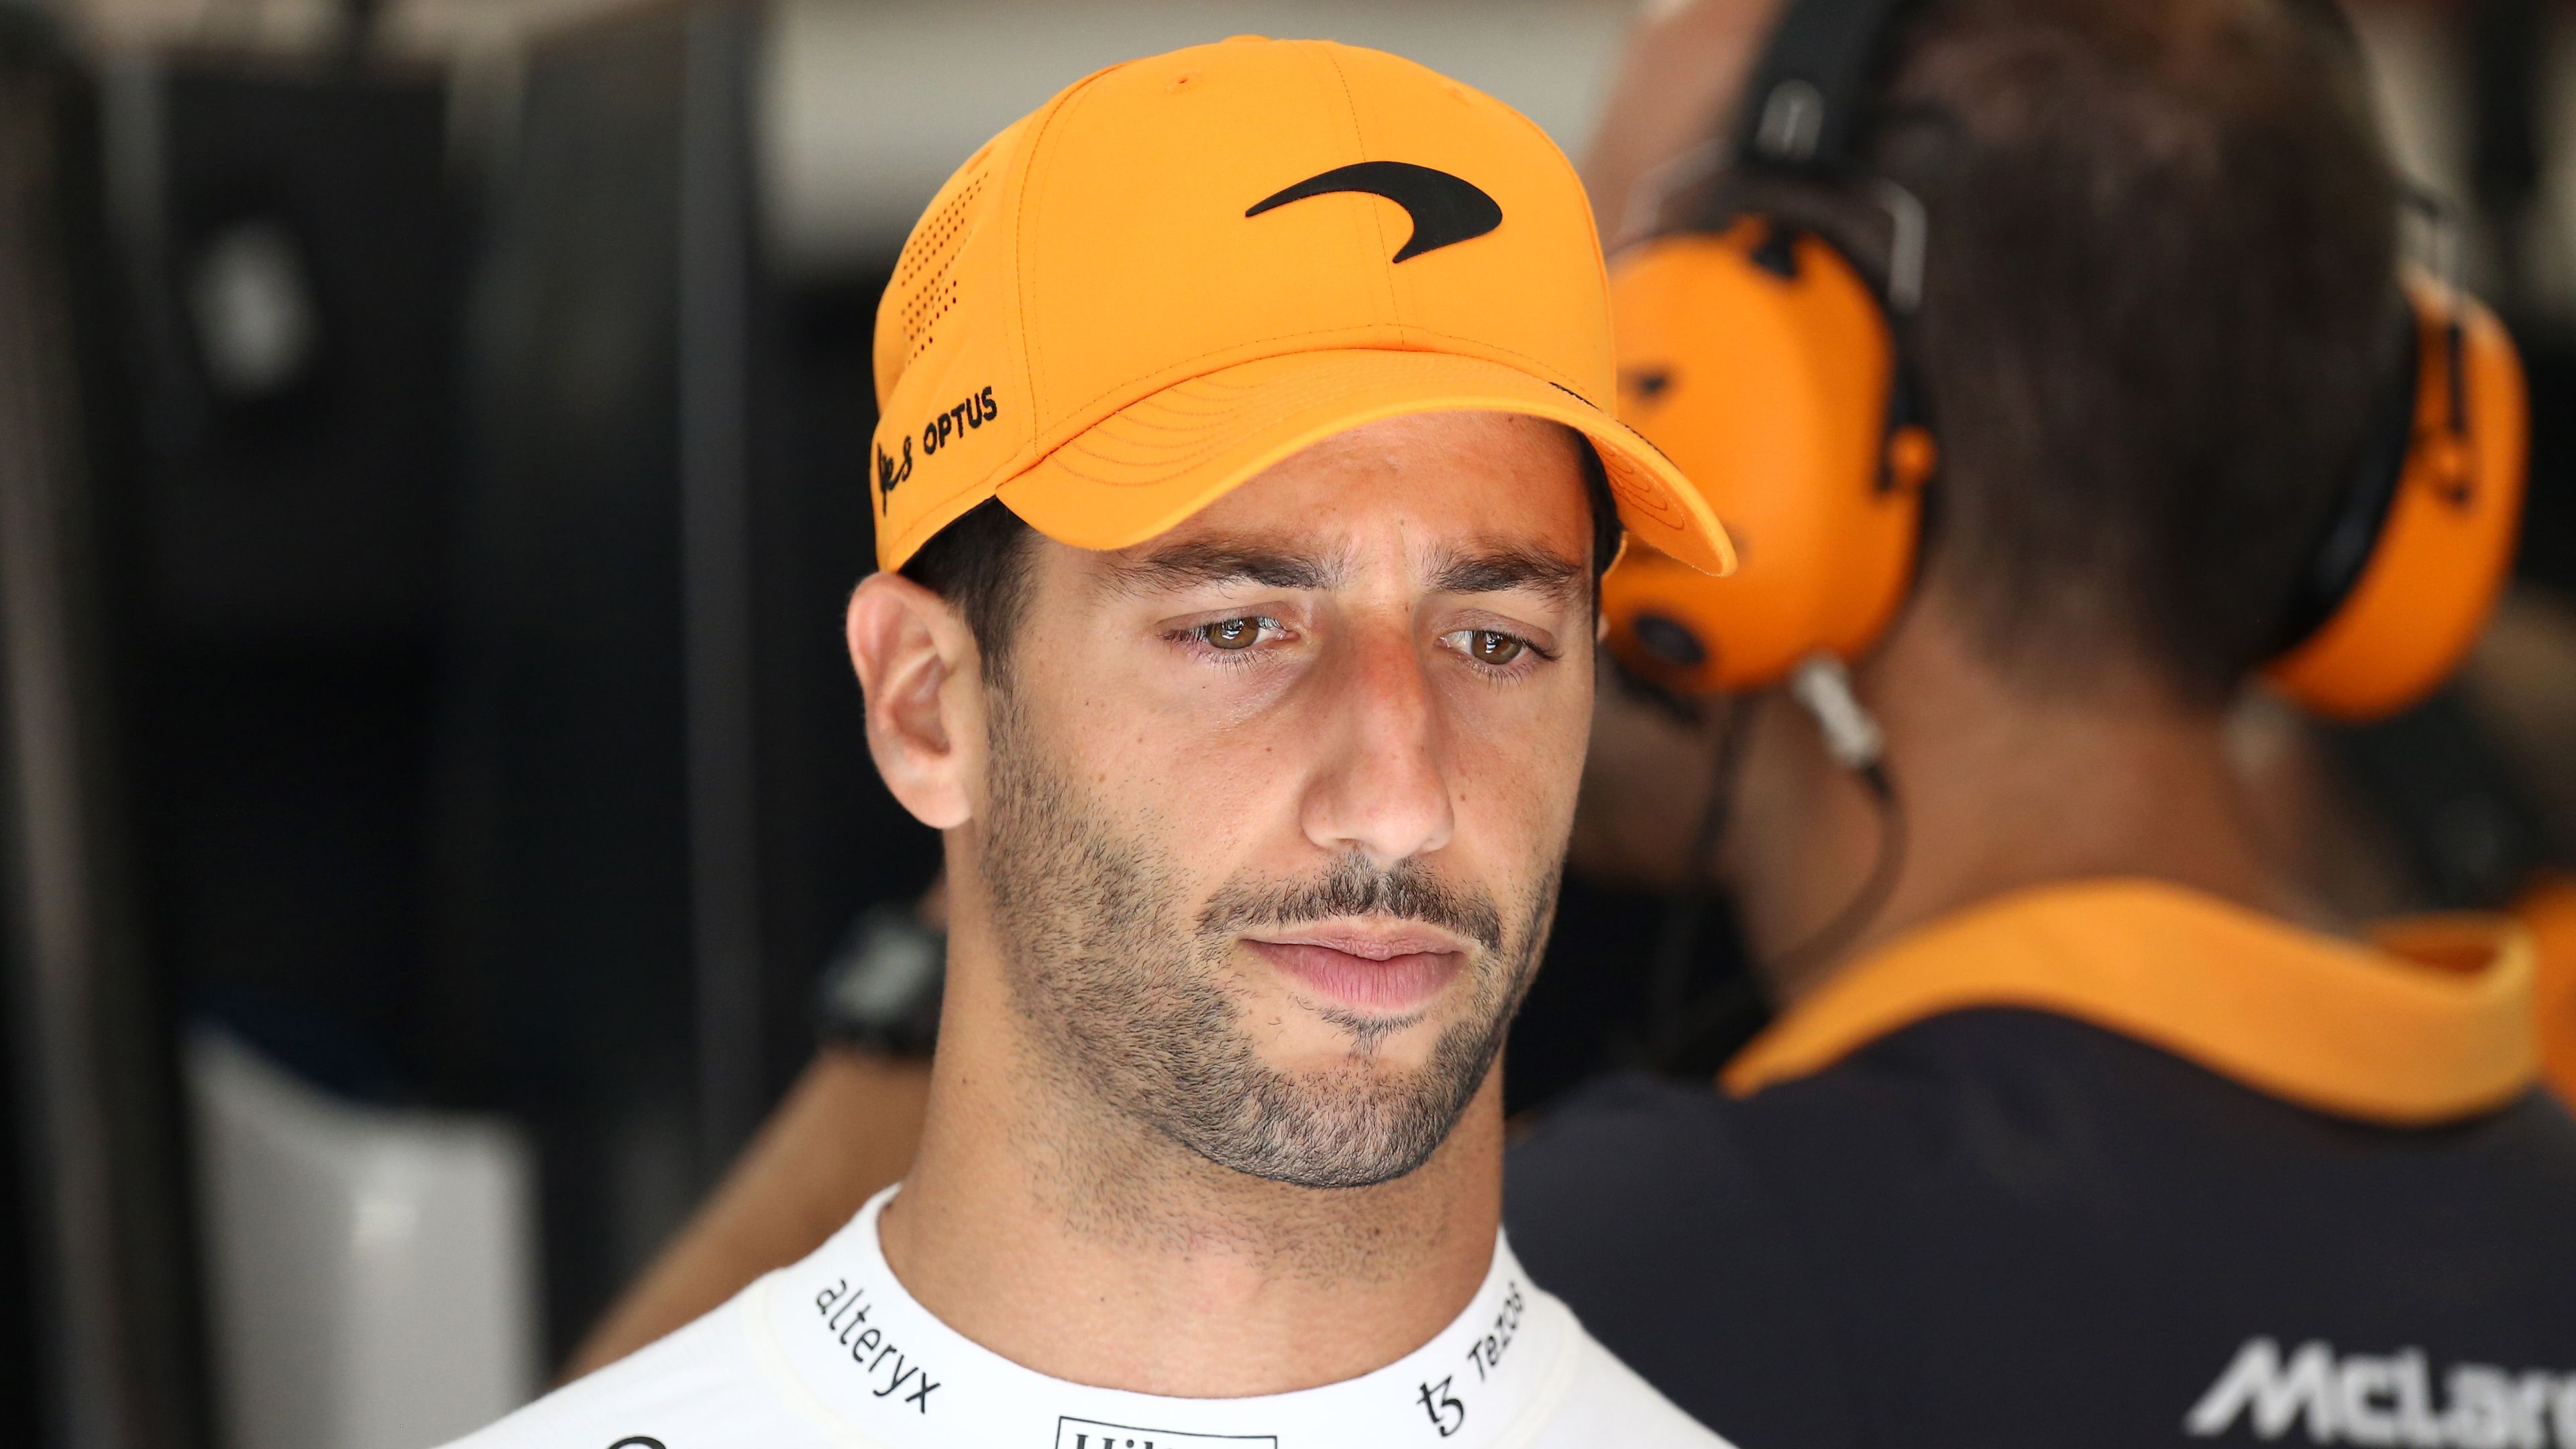 Aussie F1 driver Daniel Ricciardo told McLaren intends to replace him with Oscar Piastri